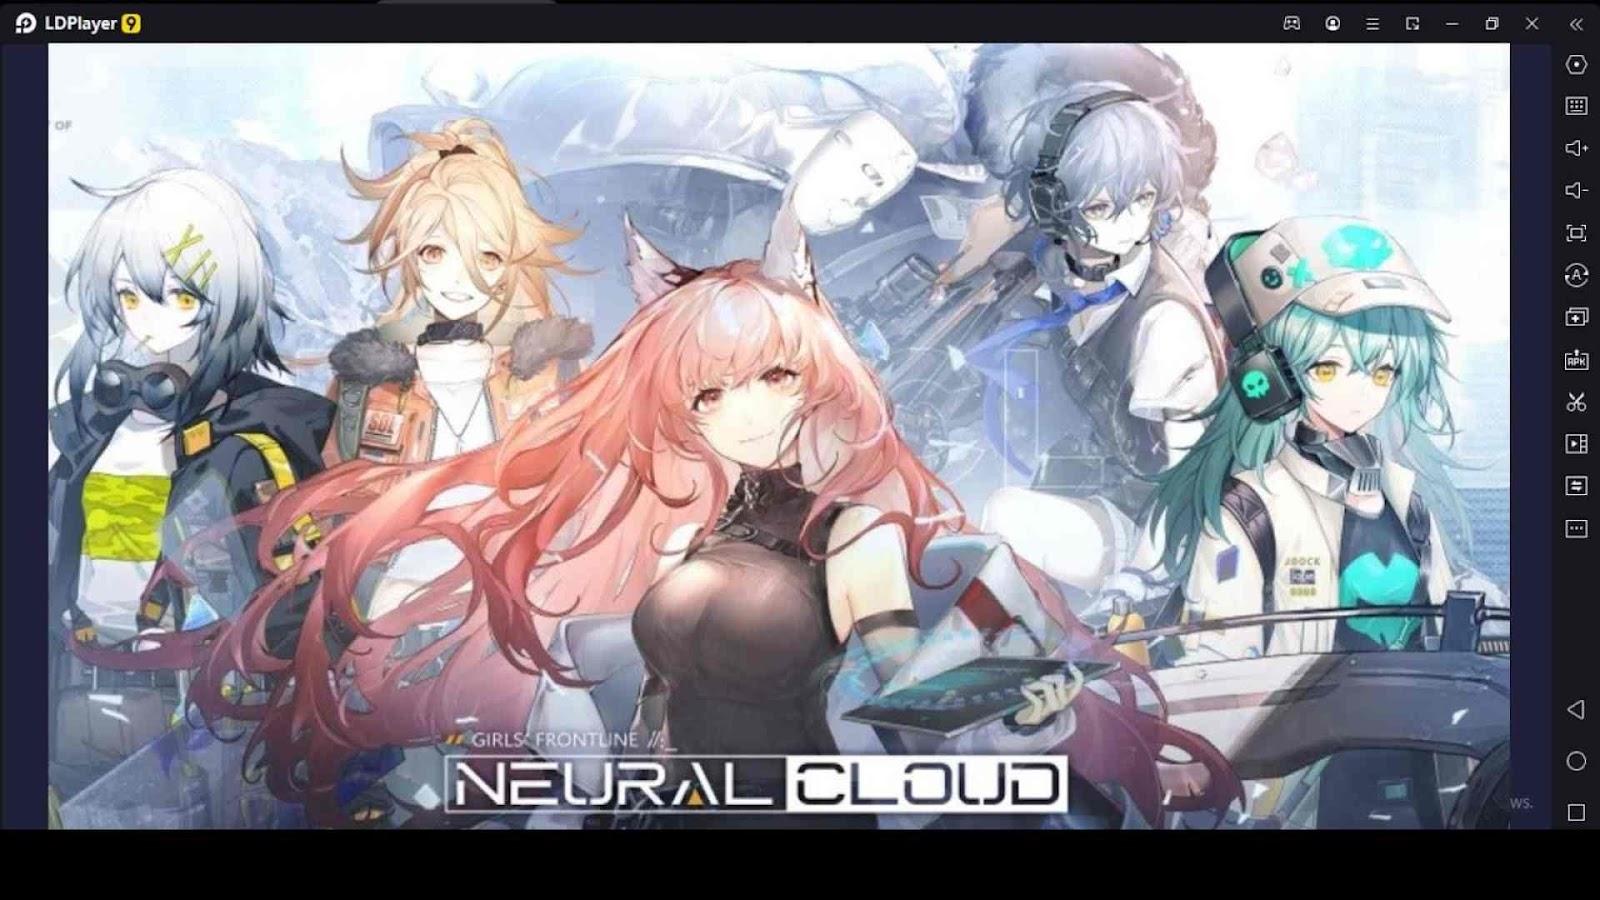 Project Neural Cloud